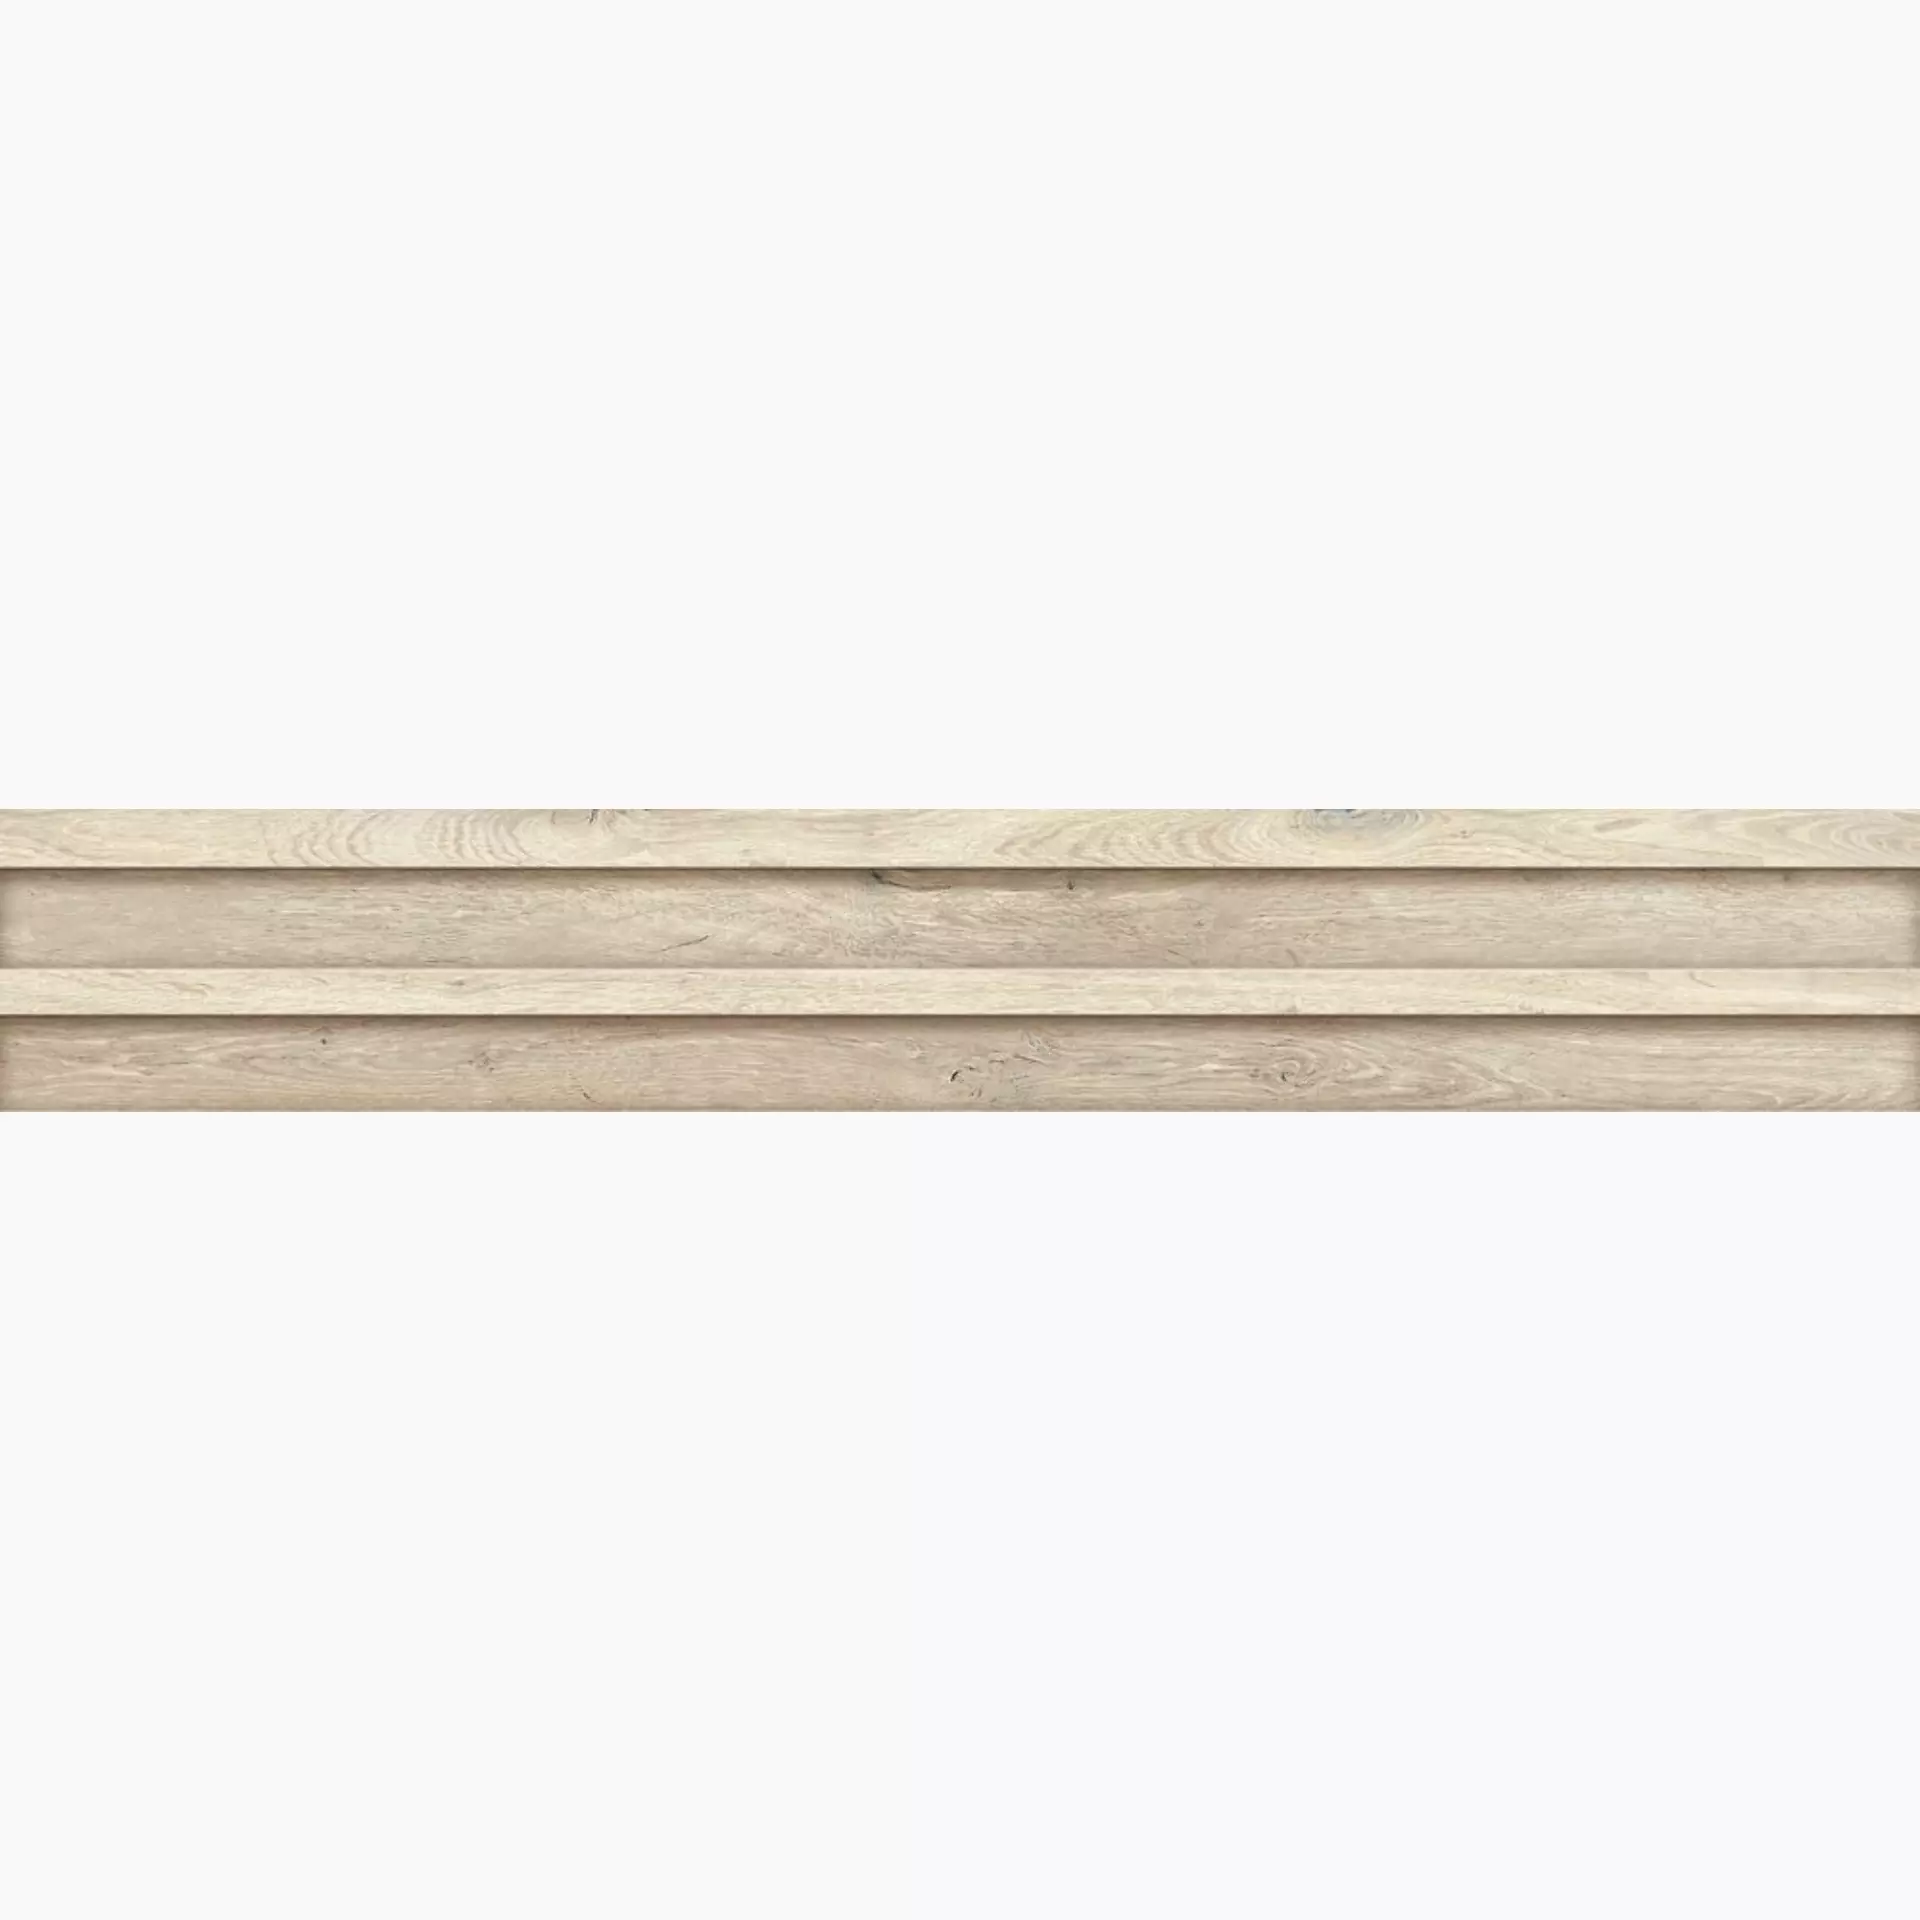 Monocibec Woodtime Larice Naturale Decor Maxi 0089621 19x120cm rectified 9mm